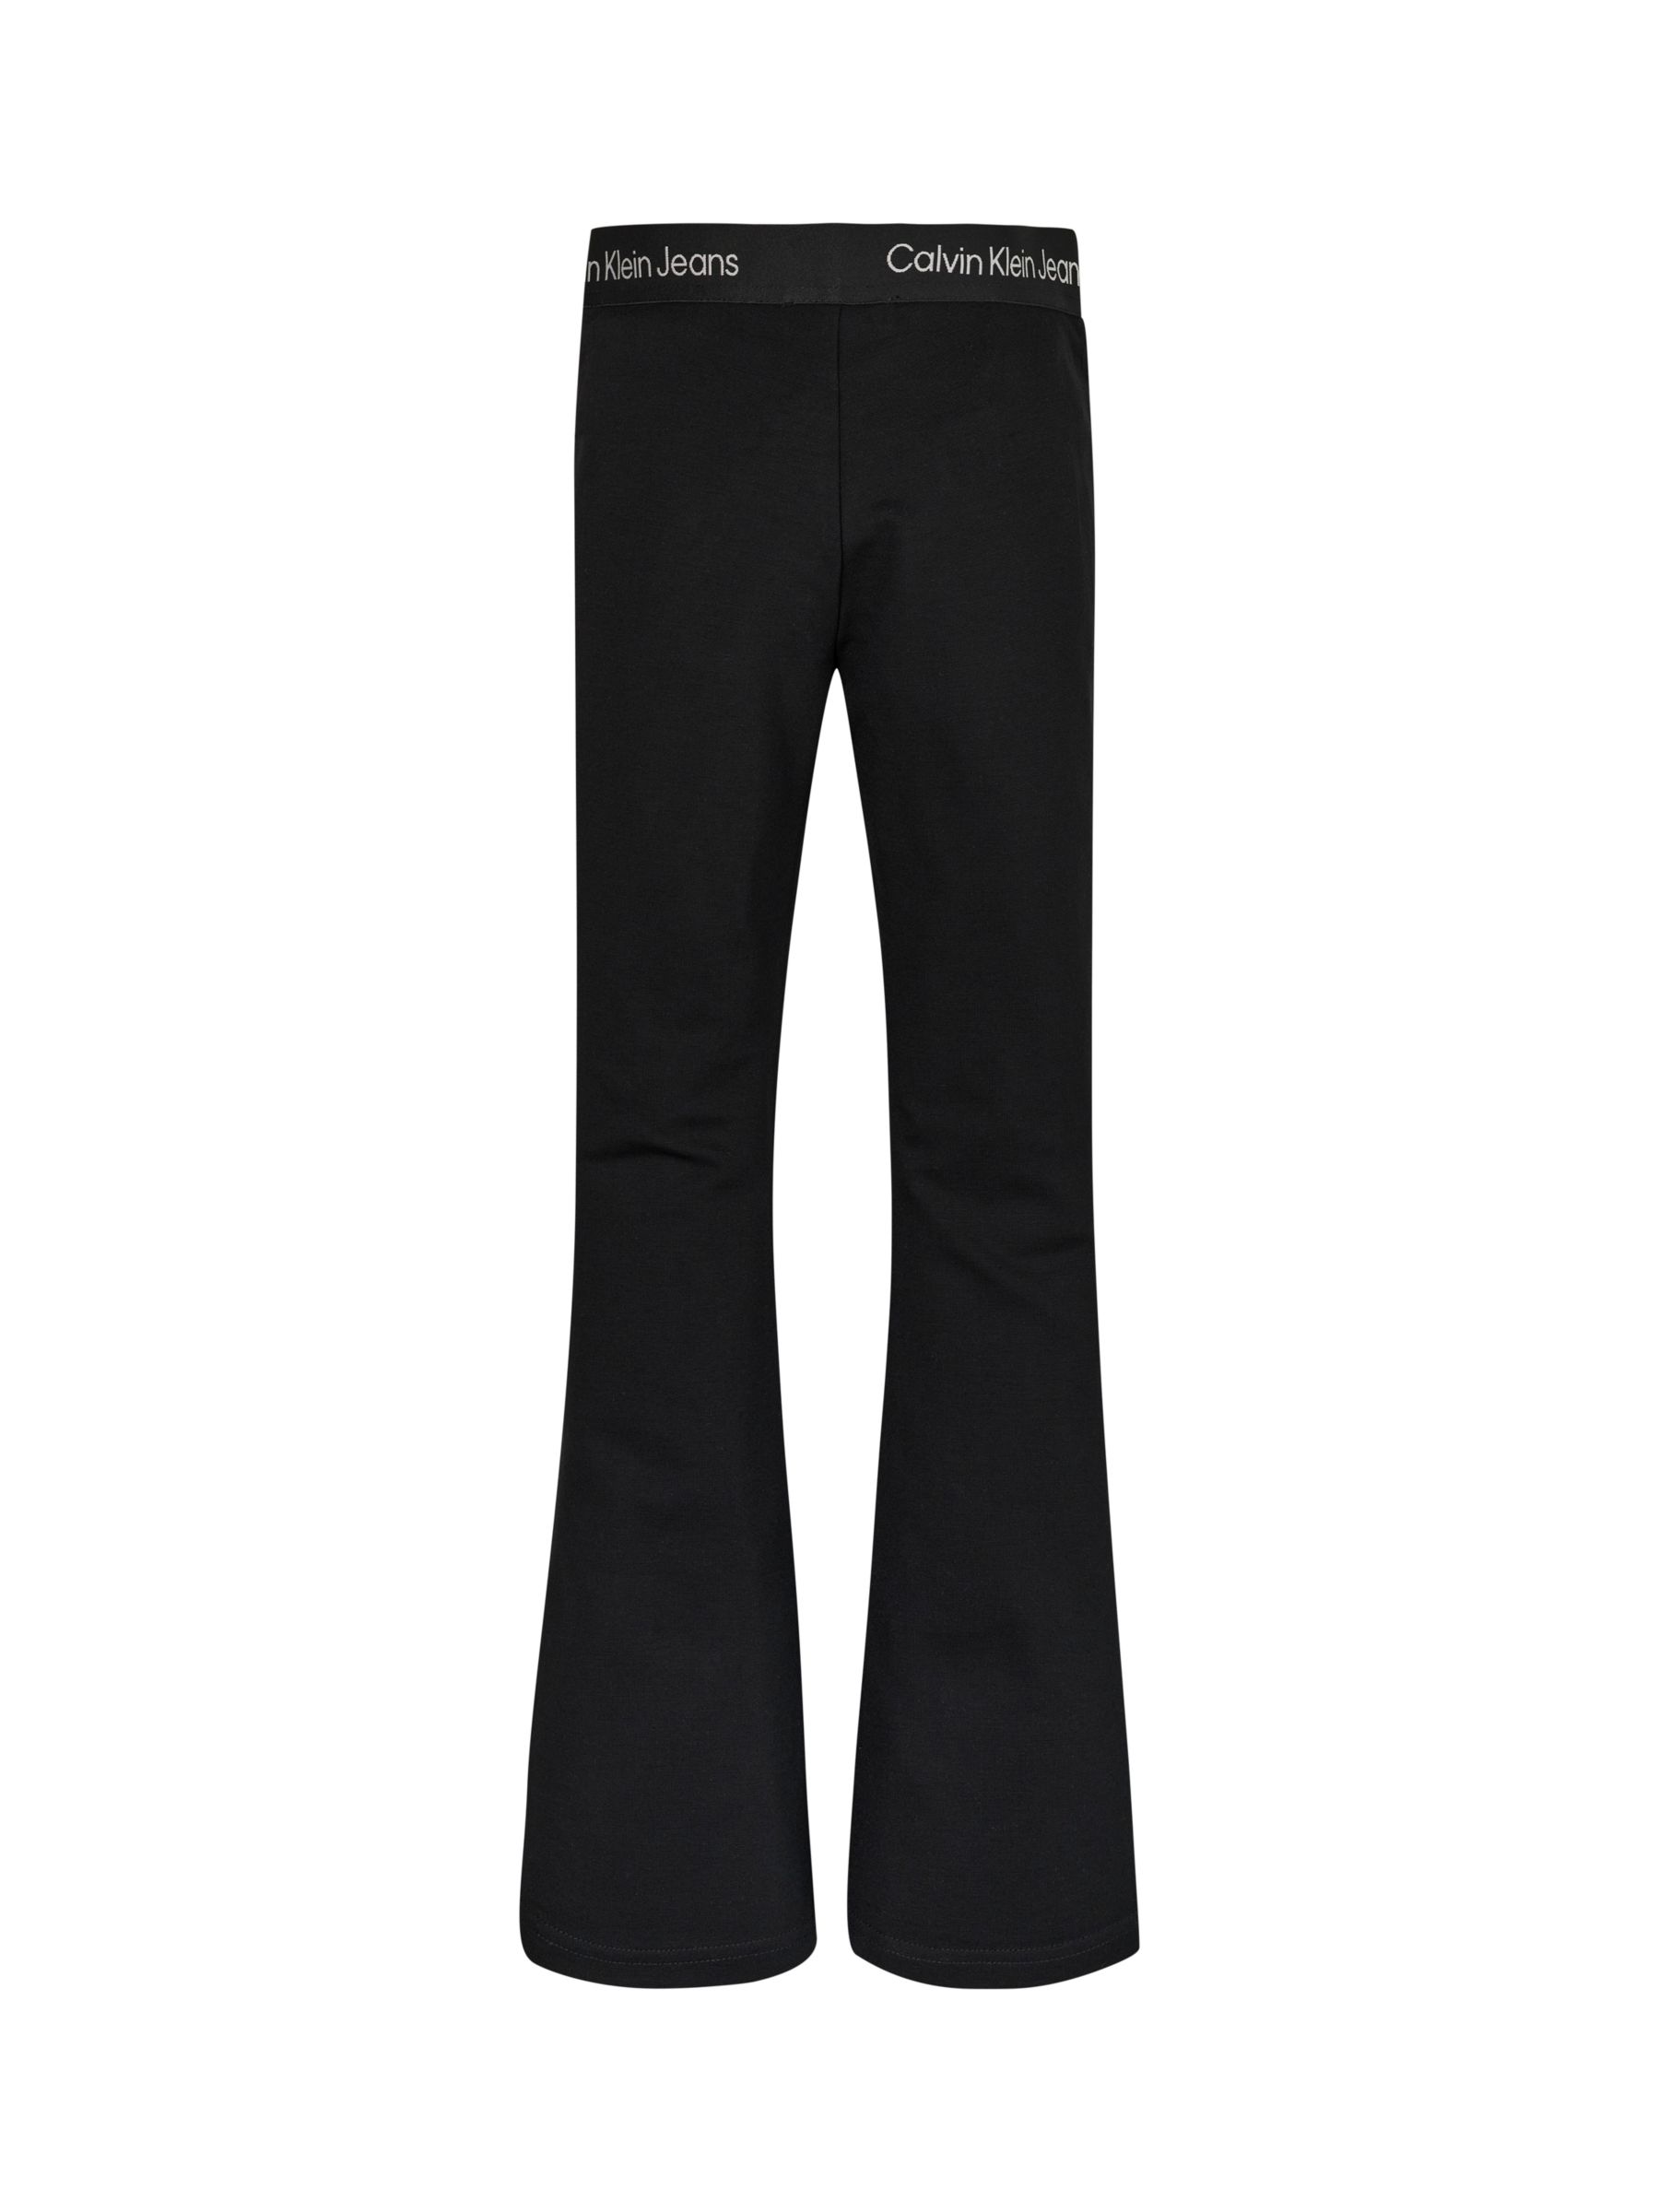 Calvin Klein Punto Tape Flared Trousers, Black at John Lewis & Partners